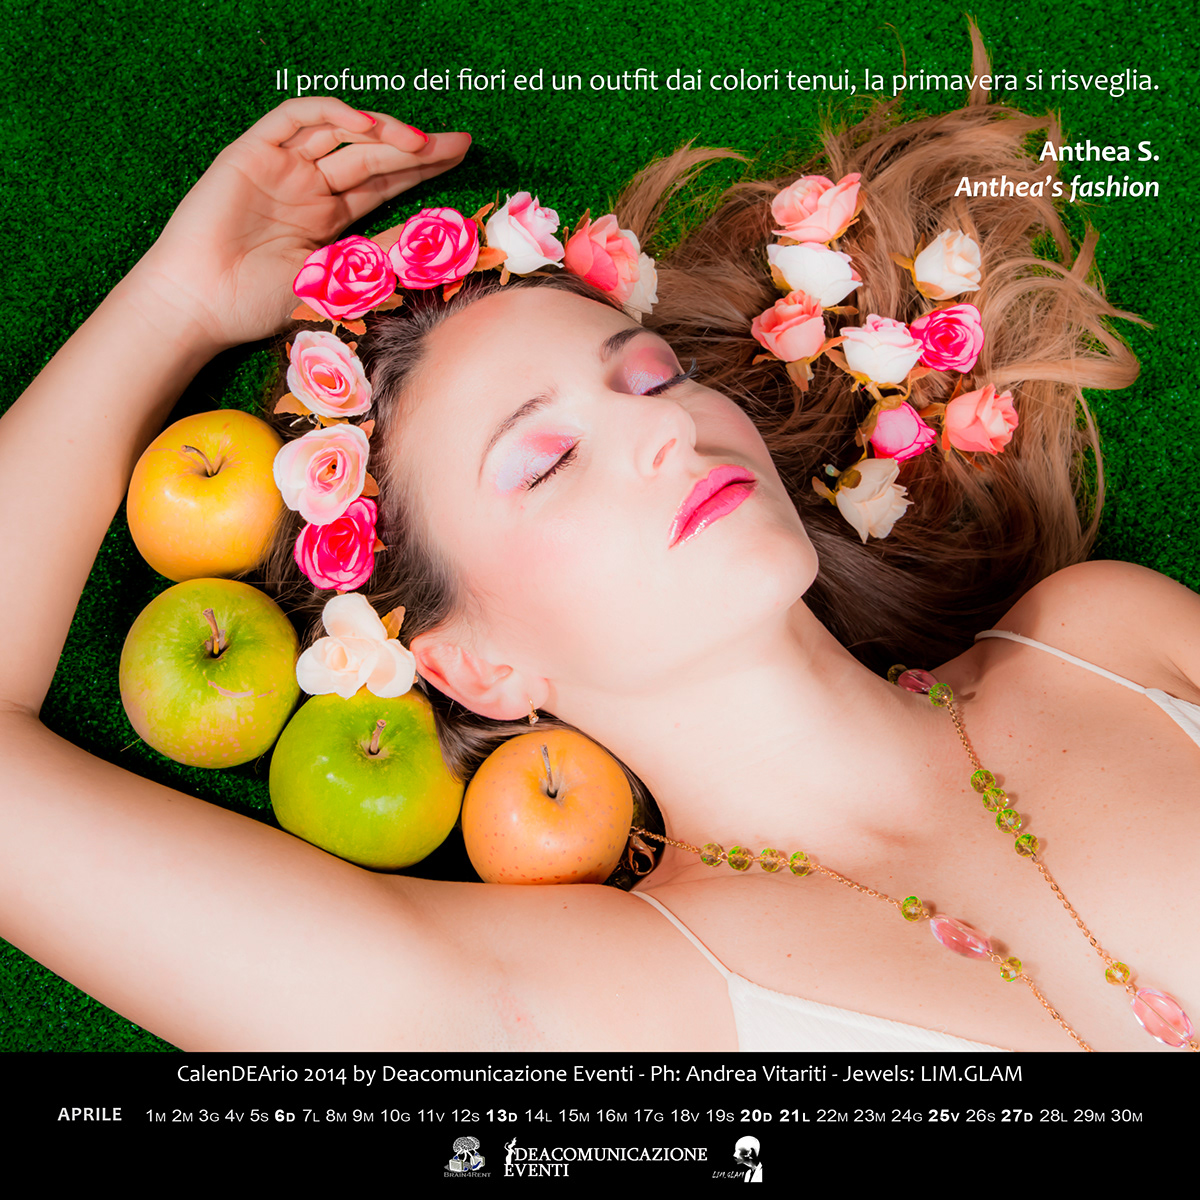 beauty jewels photo models glamour calendar Calendar 2014